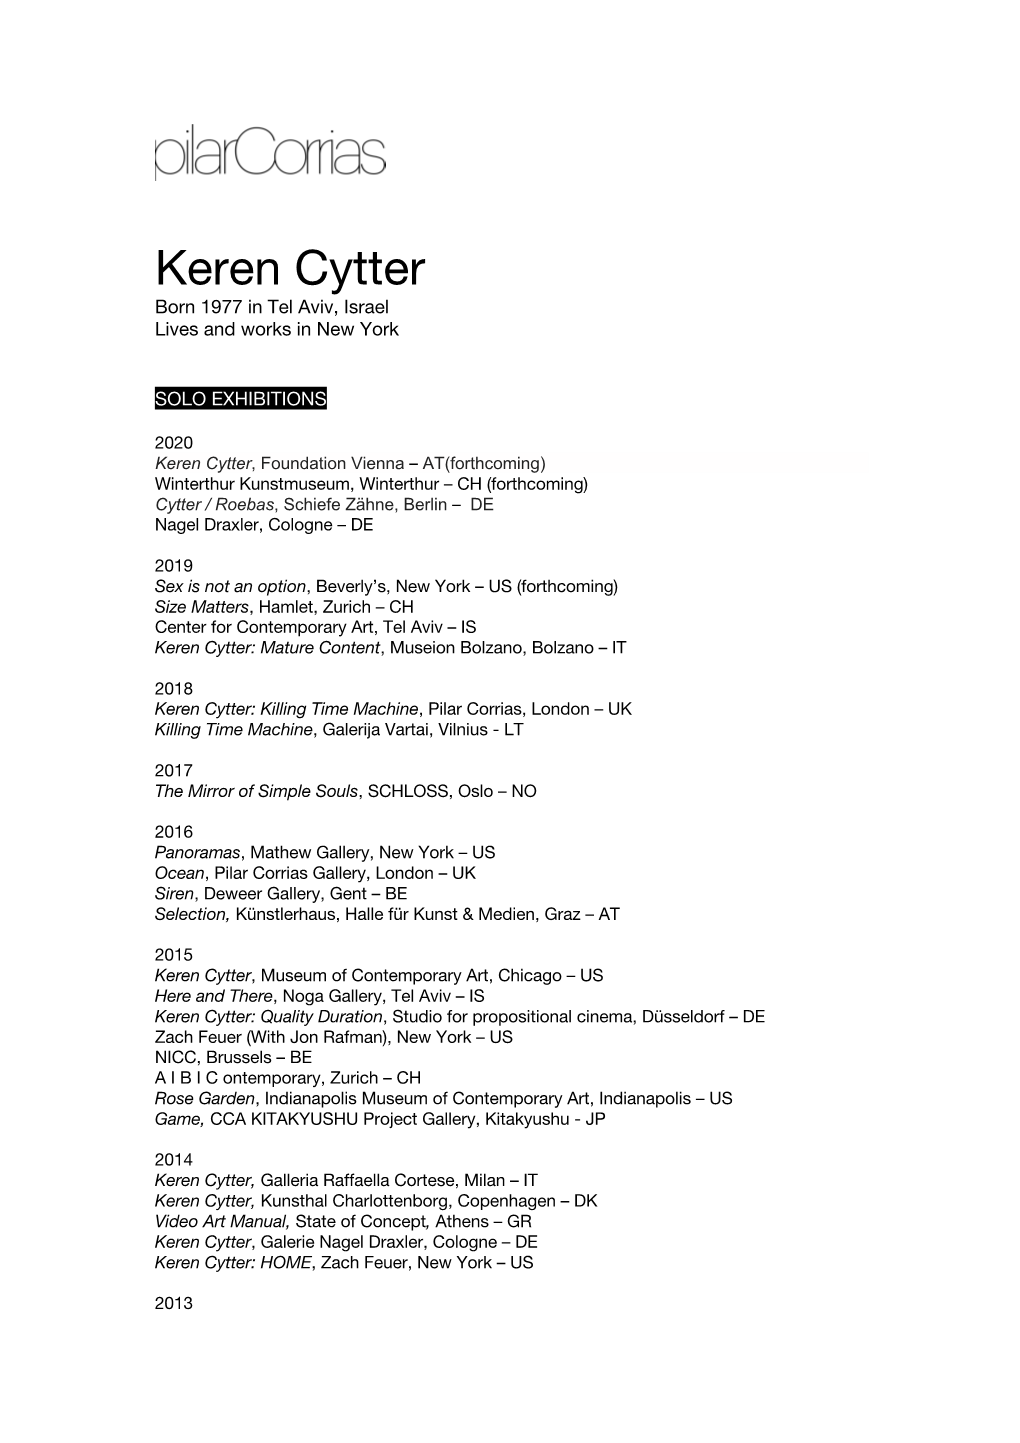 Keren Cytter Born 1977 in Tel Aviv, Israel Lives and Works in New York